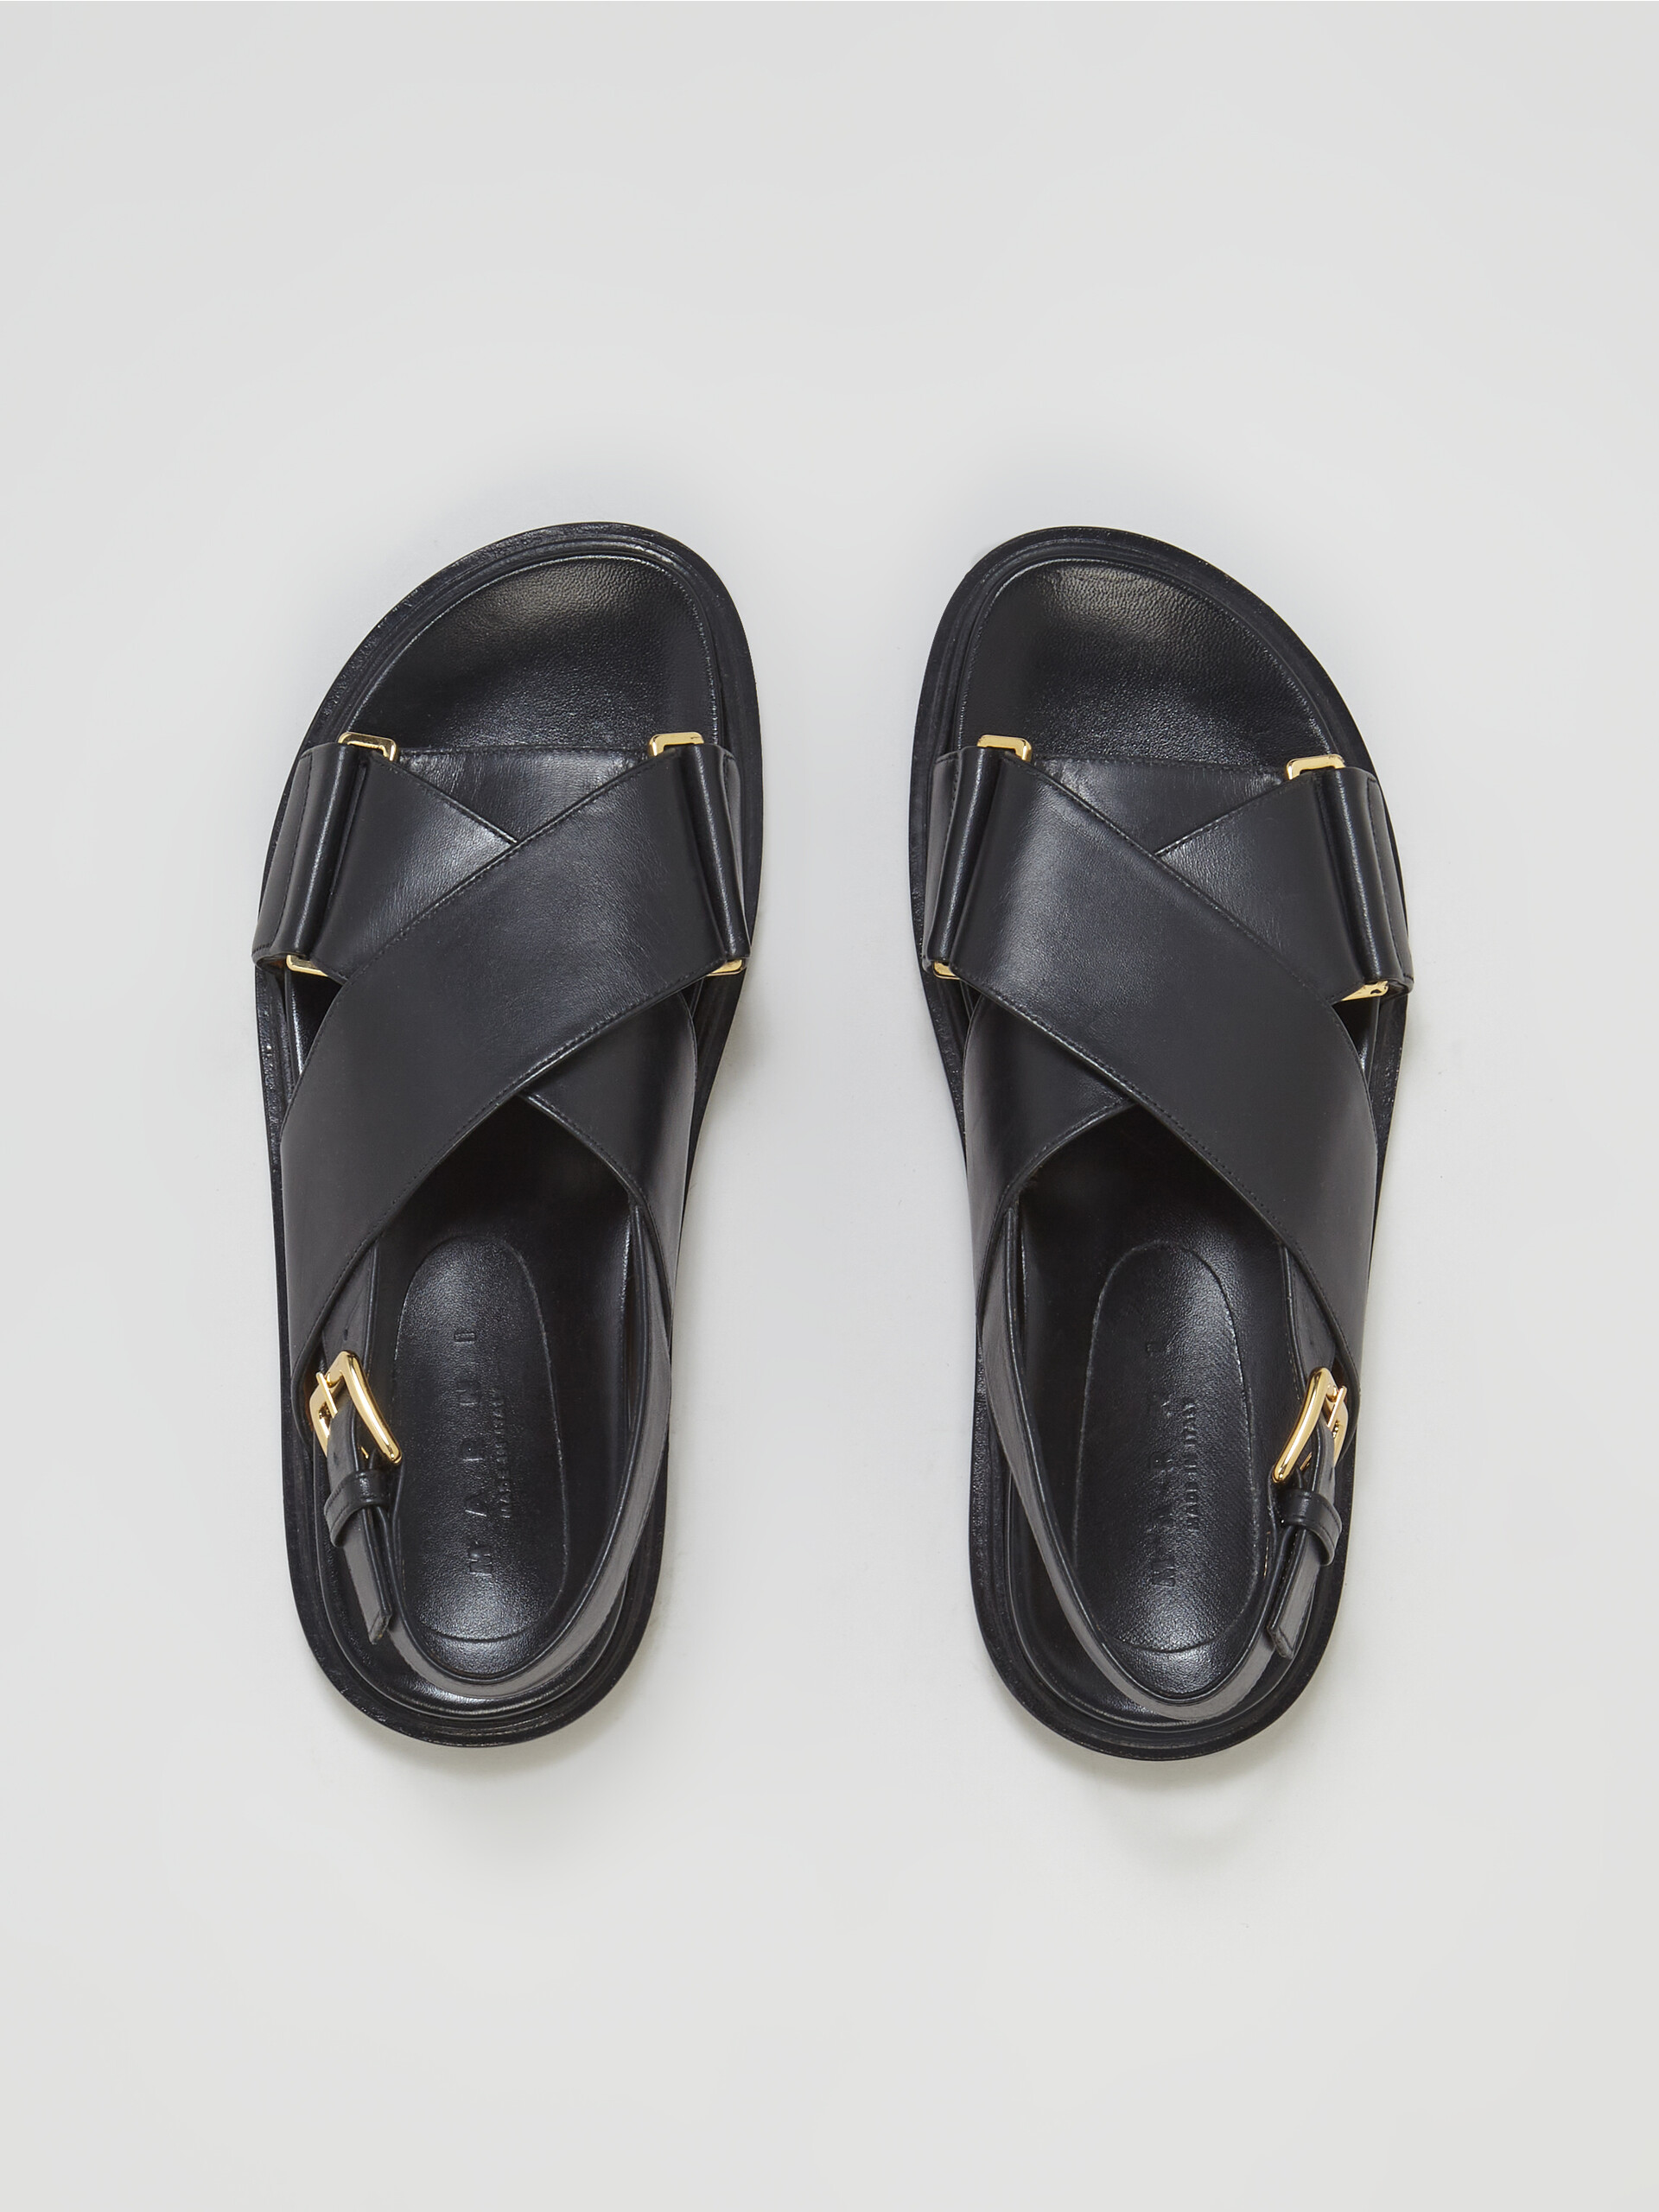 Black leather Fussbett - Sandals - Image 4